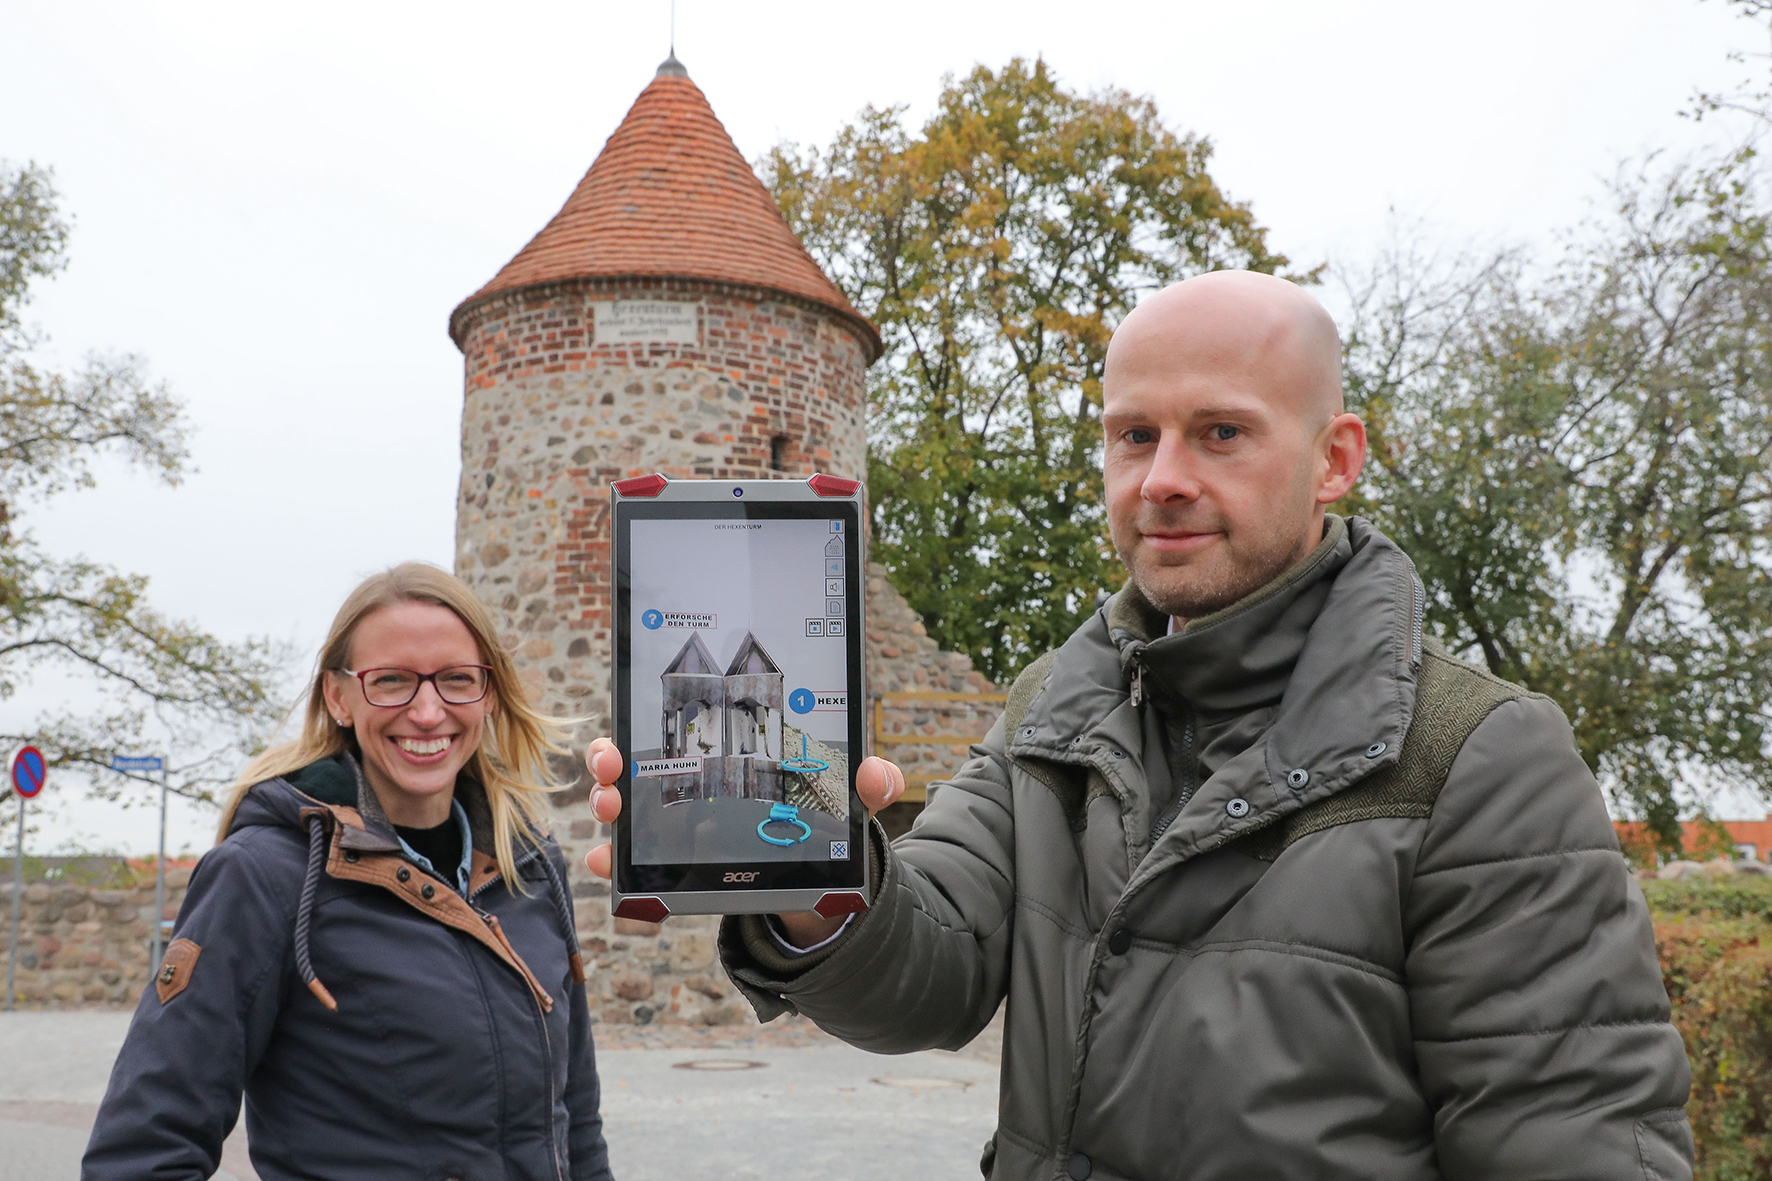 Burg2Go: Stadtgeschichte digital entdecken